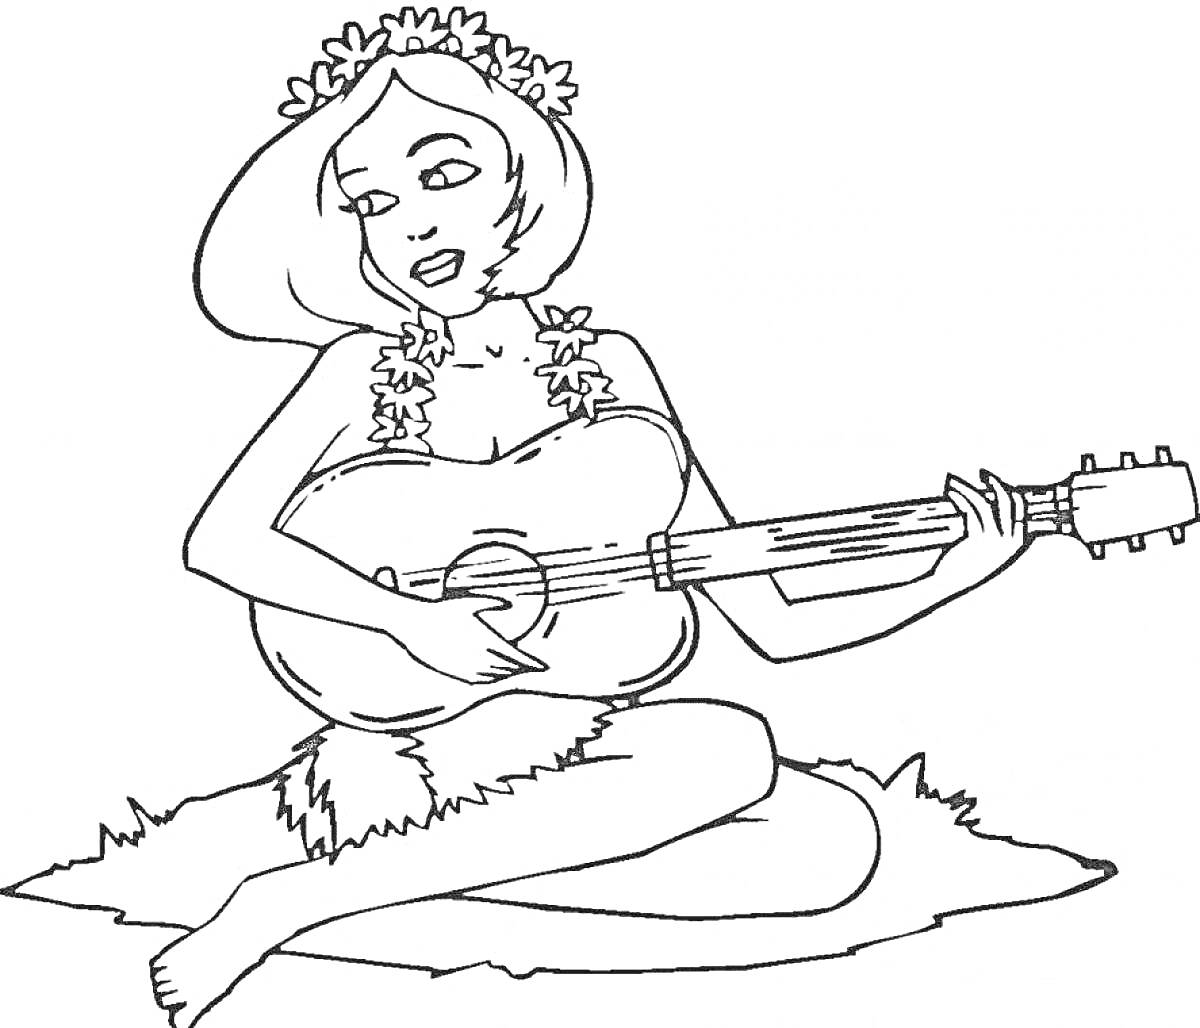 Девушка в цветочном венке и юбке играет на гитаре, сидя на траве.